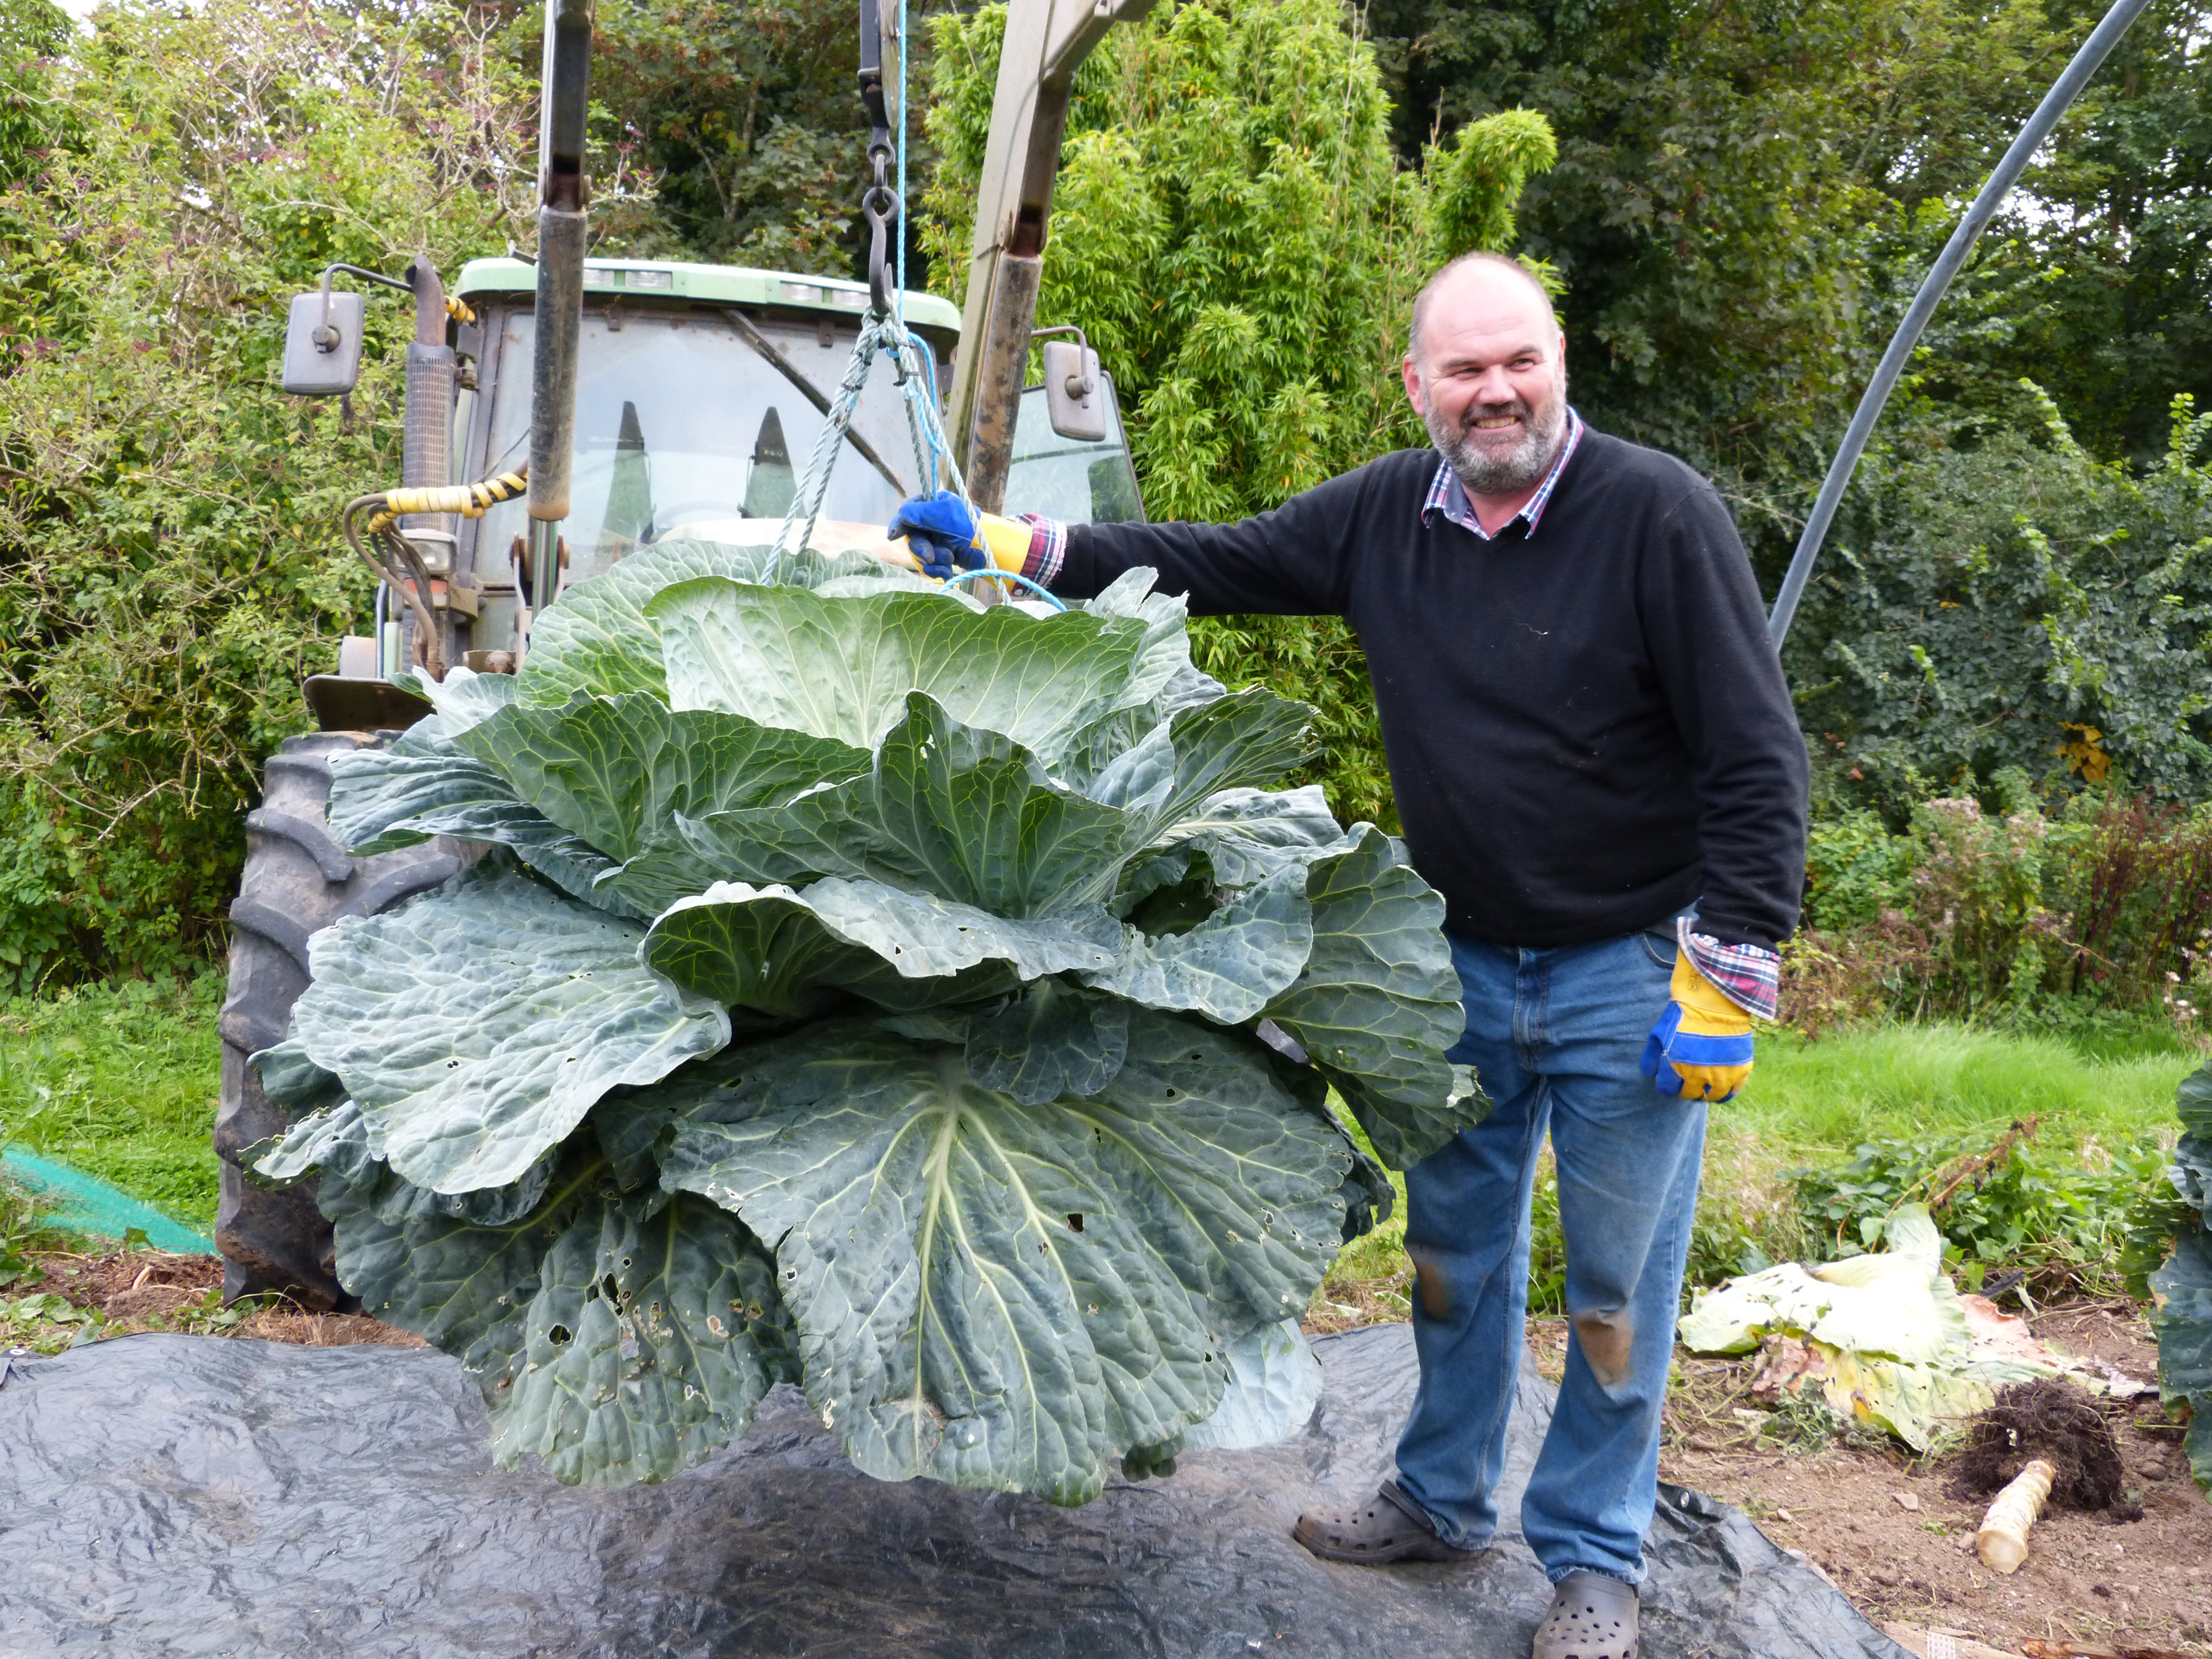 David Thomas with his cabbage on a tractor (David Thomas/PA)